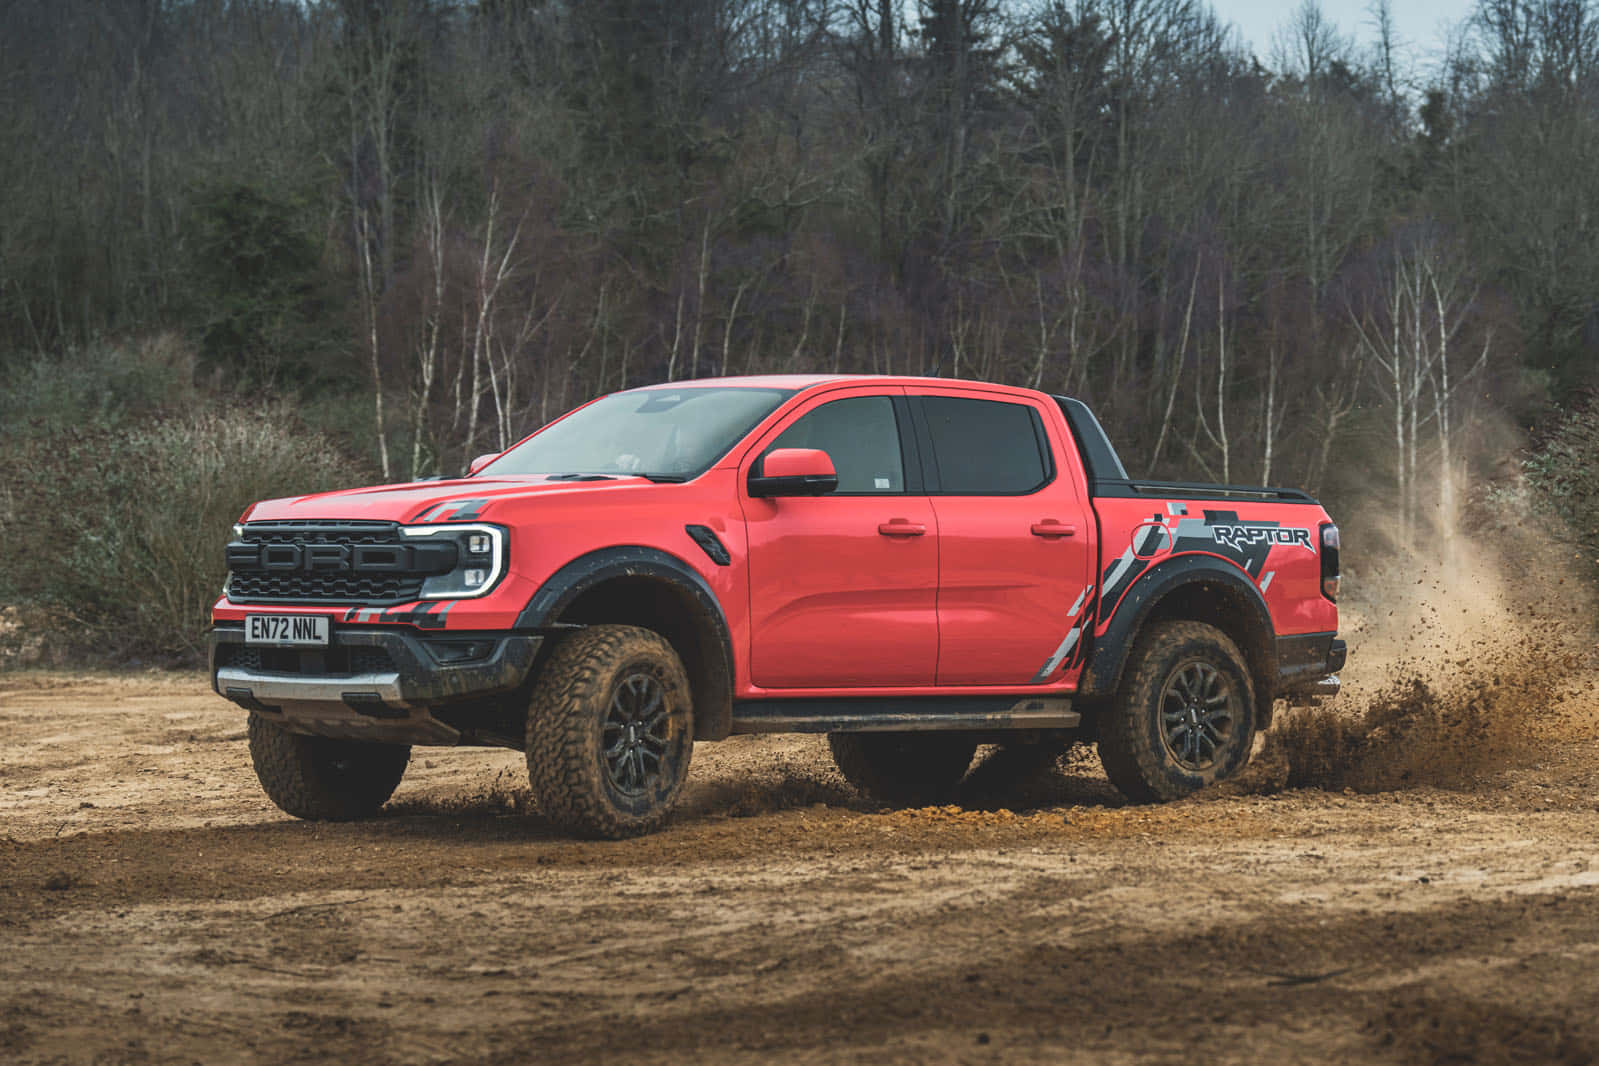 Ford Ranger Raptor - A Red Truck Driving Through A Dirt Field